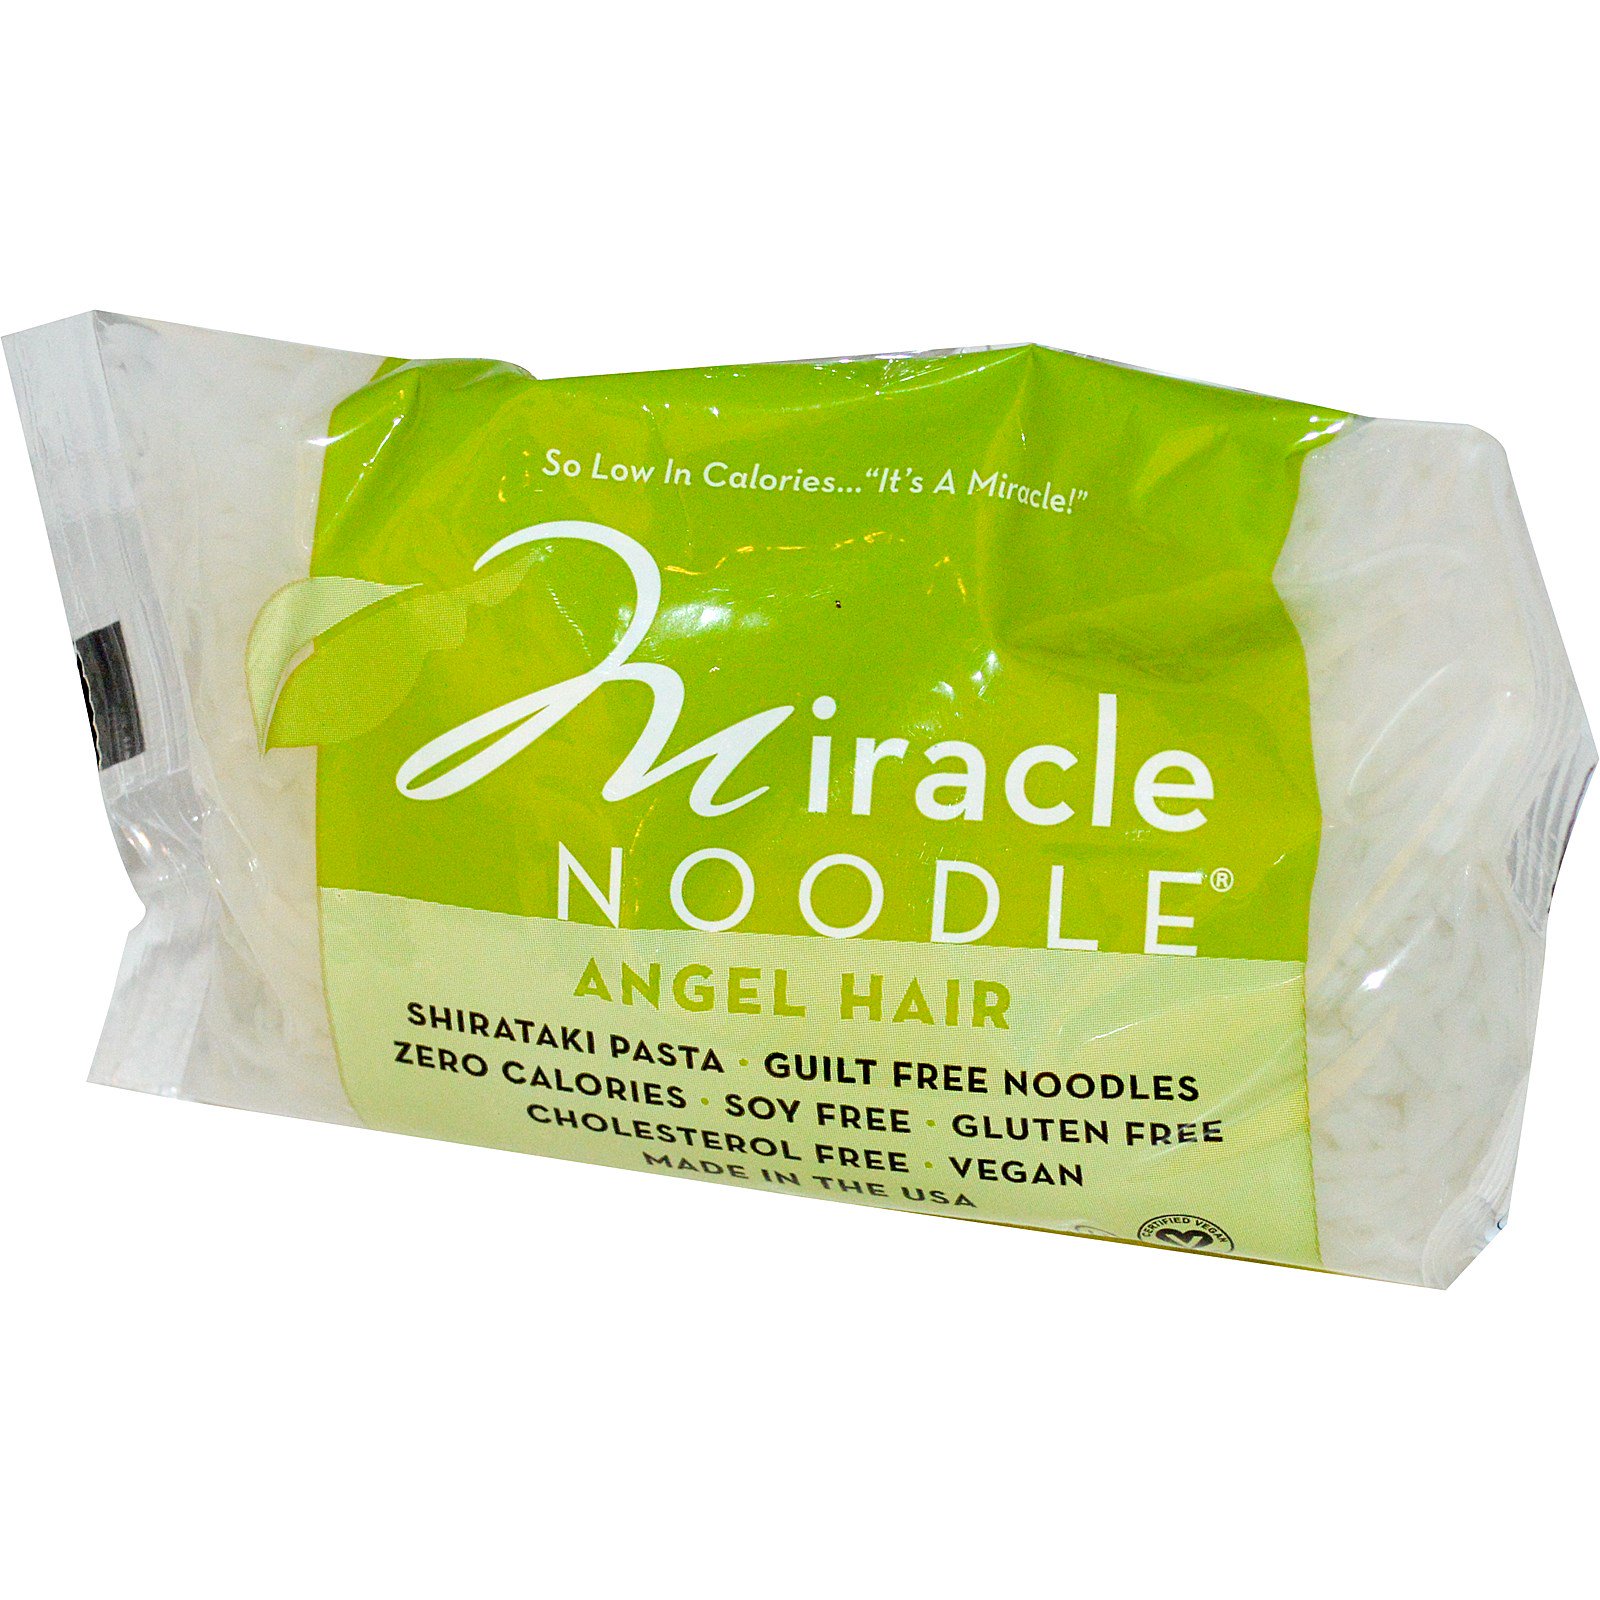 Miracle Noodle, Angel Hair, Shirataki Pasta, 7 oz (198 g ...